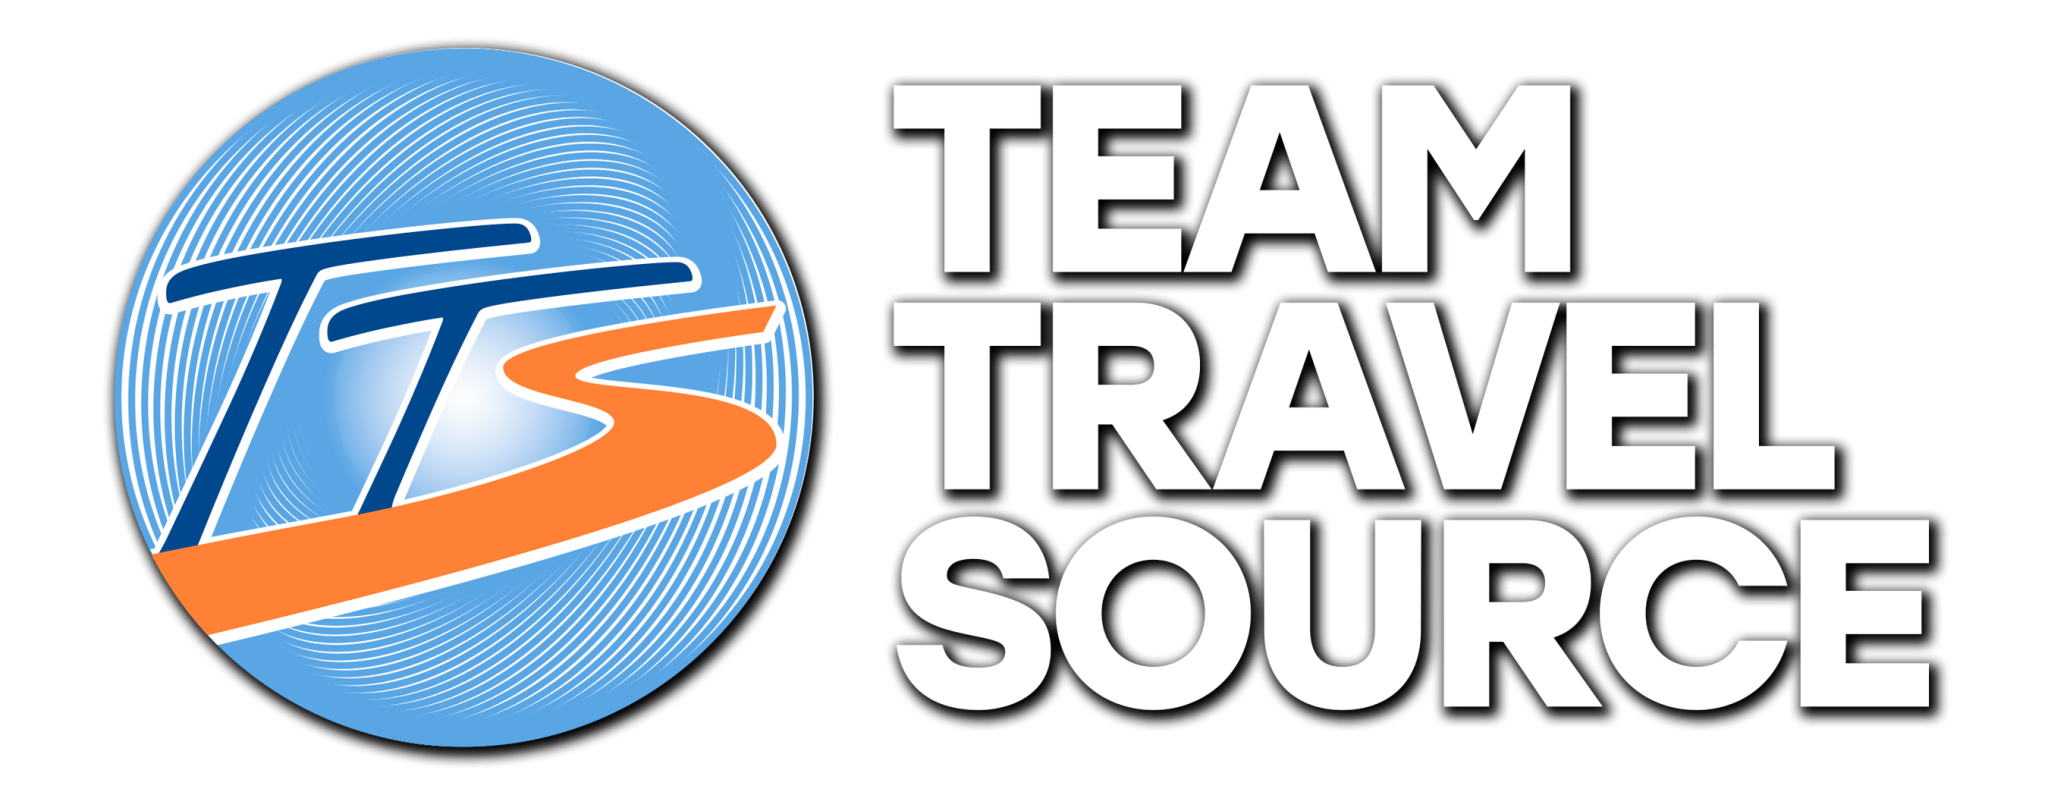 TTS-logo-white-letters-w-shadow